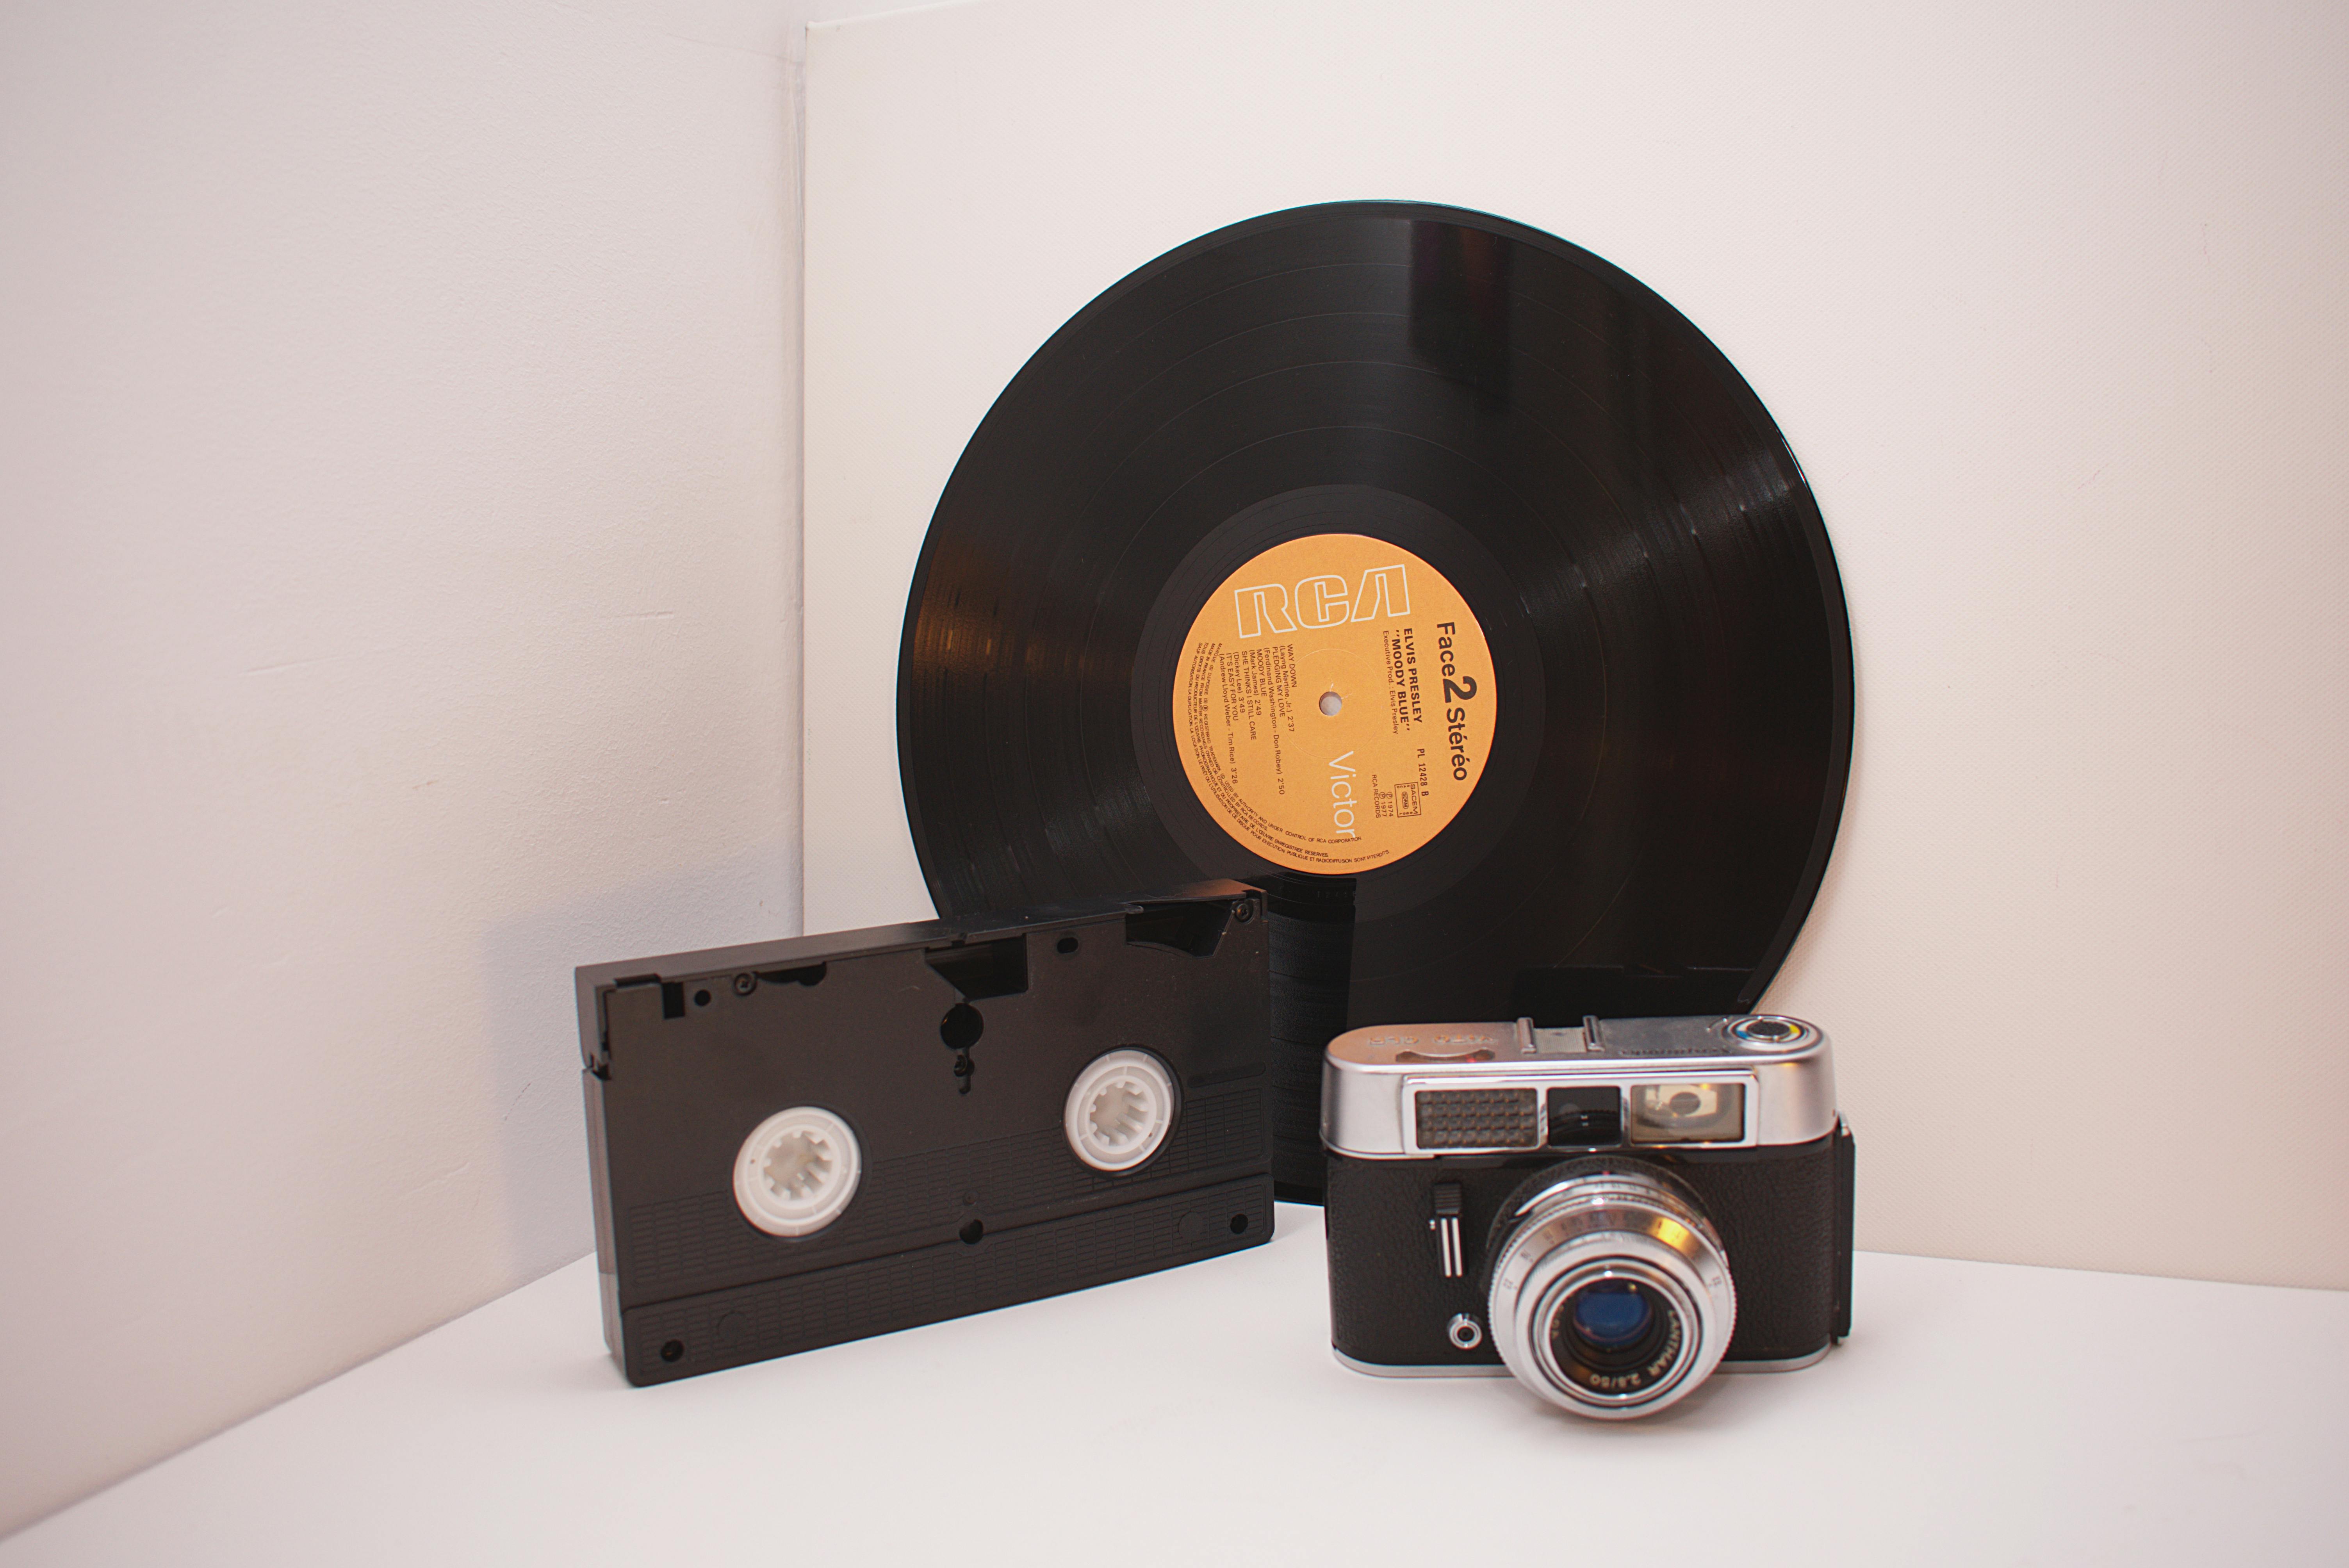 Vinyl Record On Vinyl Player · Free Stock Photo